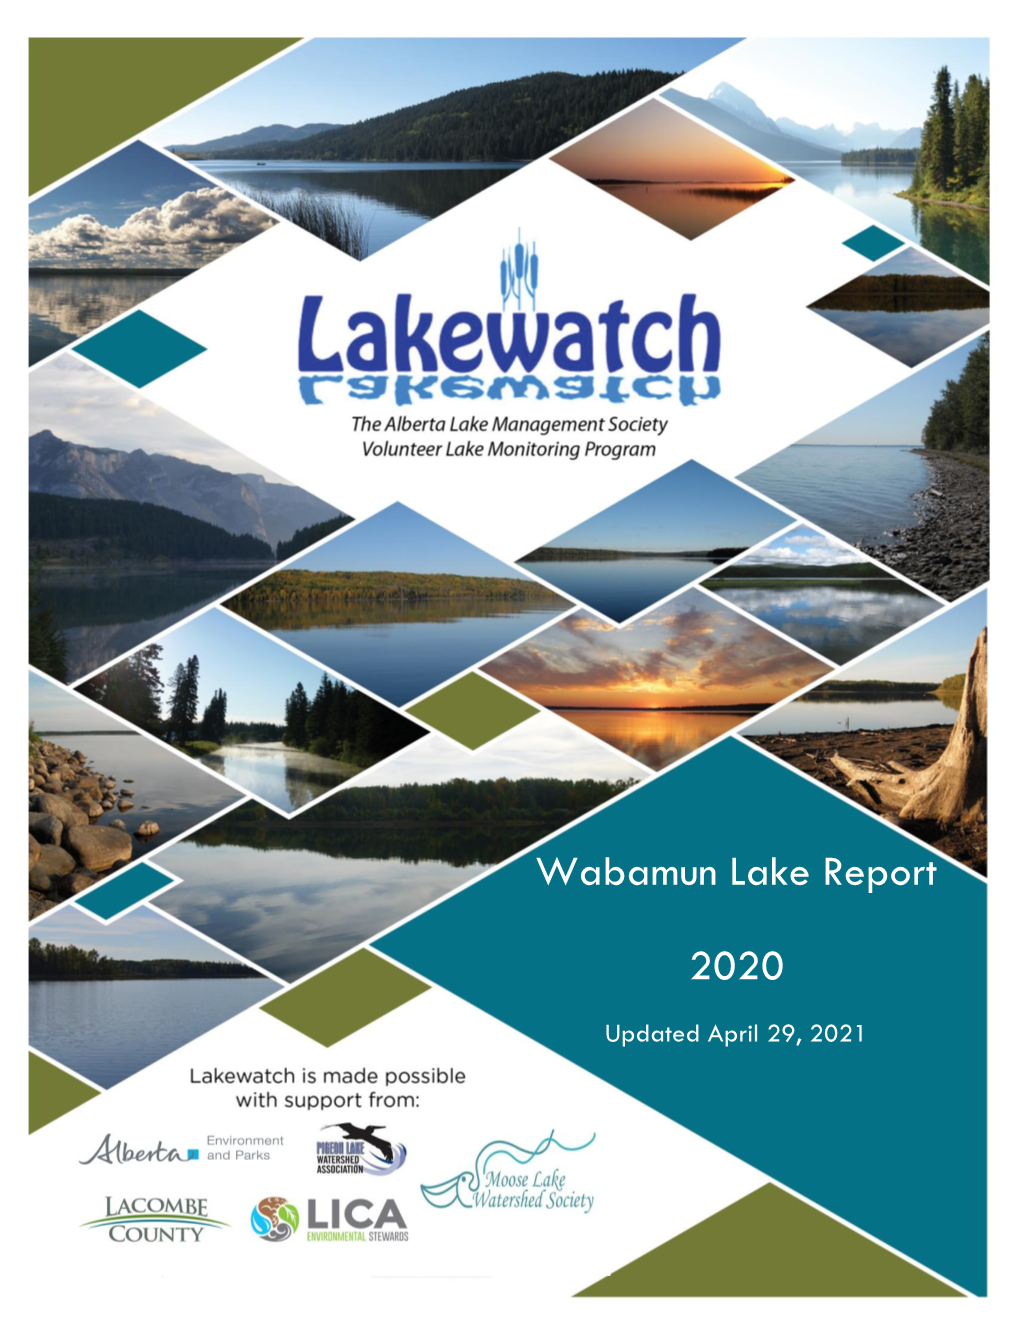 Wabamun Lake Report 2020